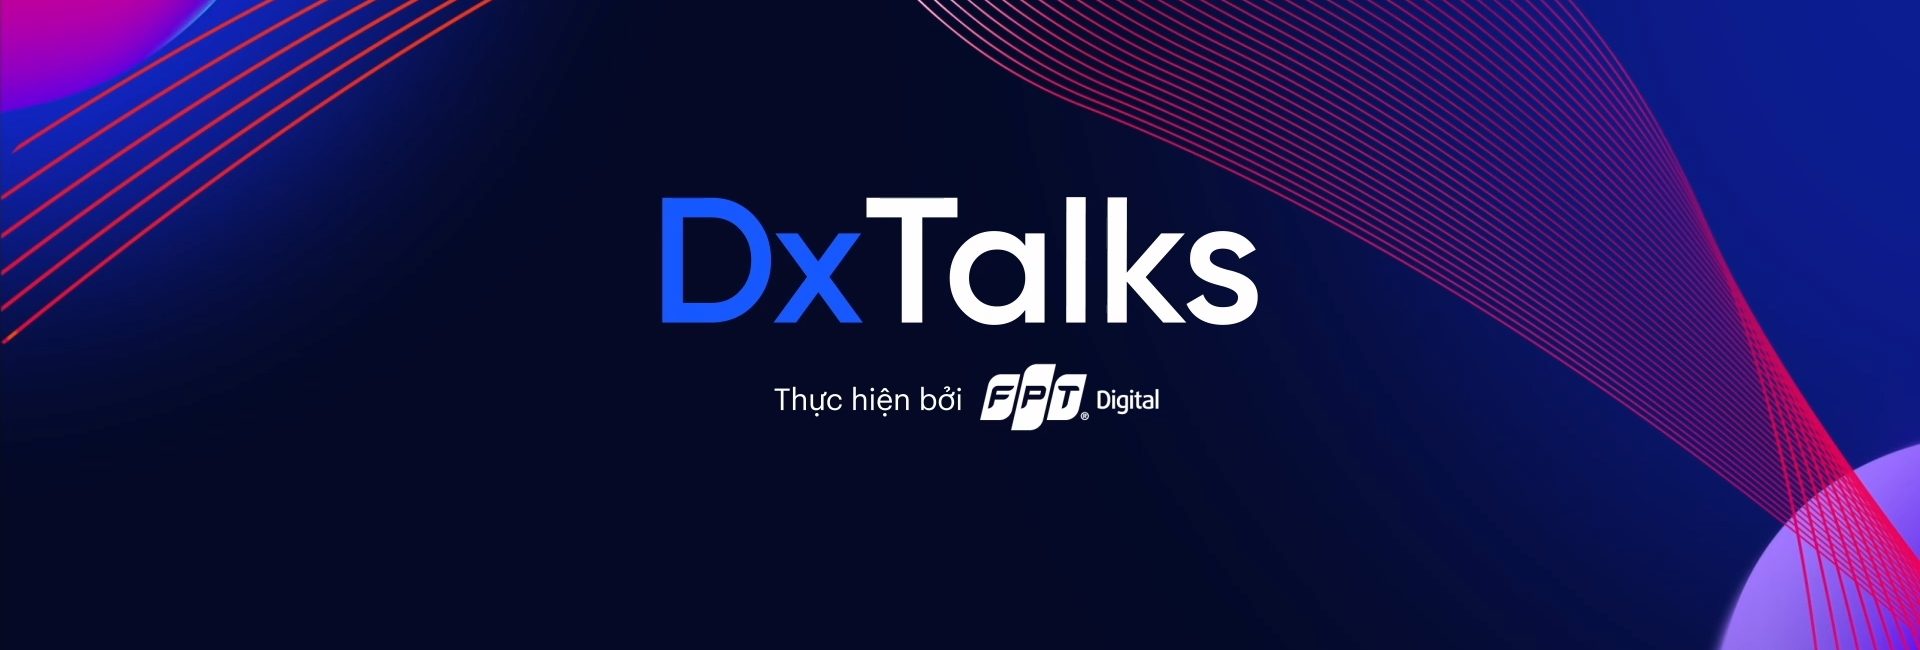 DxTalks EP02: “Building business digital transformation roadmap”